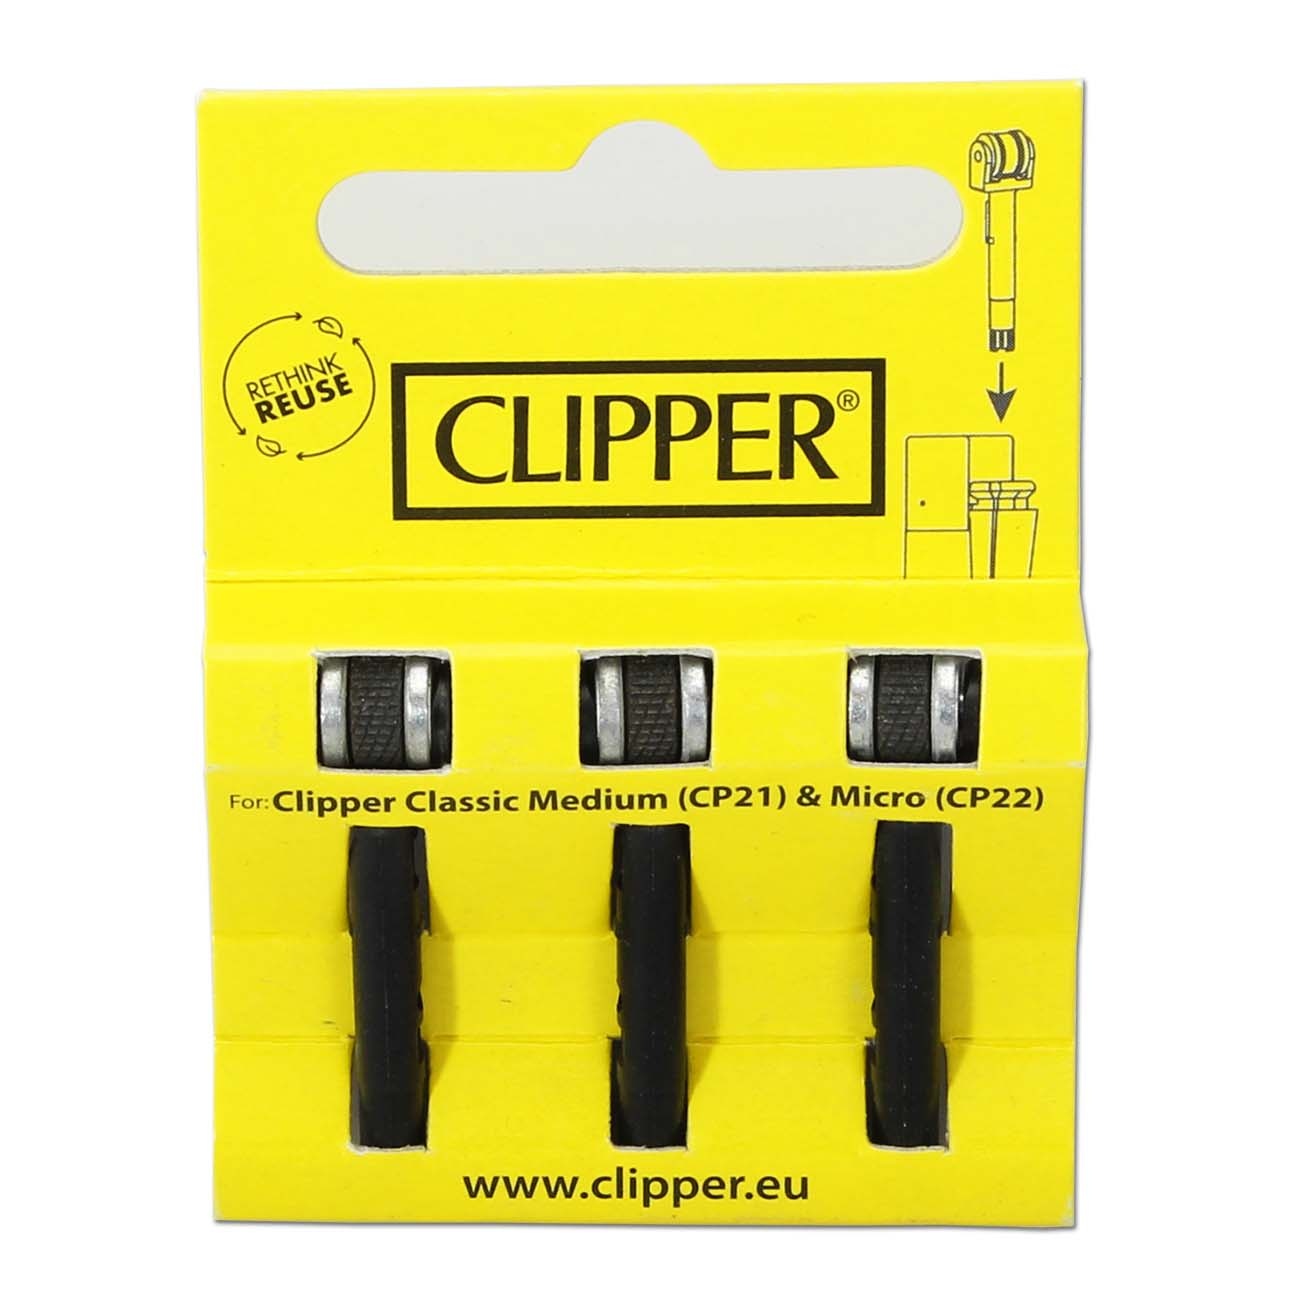 Кремень для зажигалки Clipper Micro Child-proof